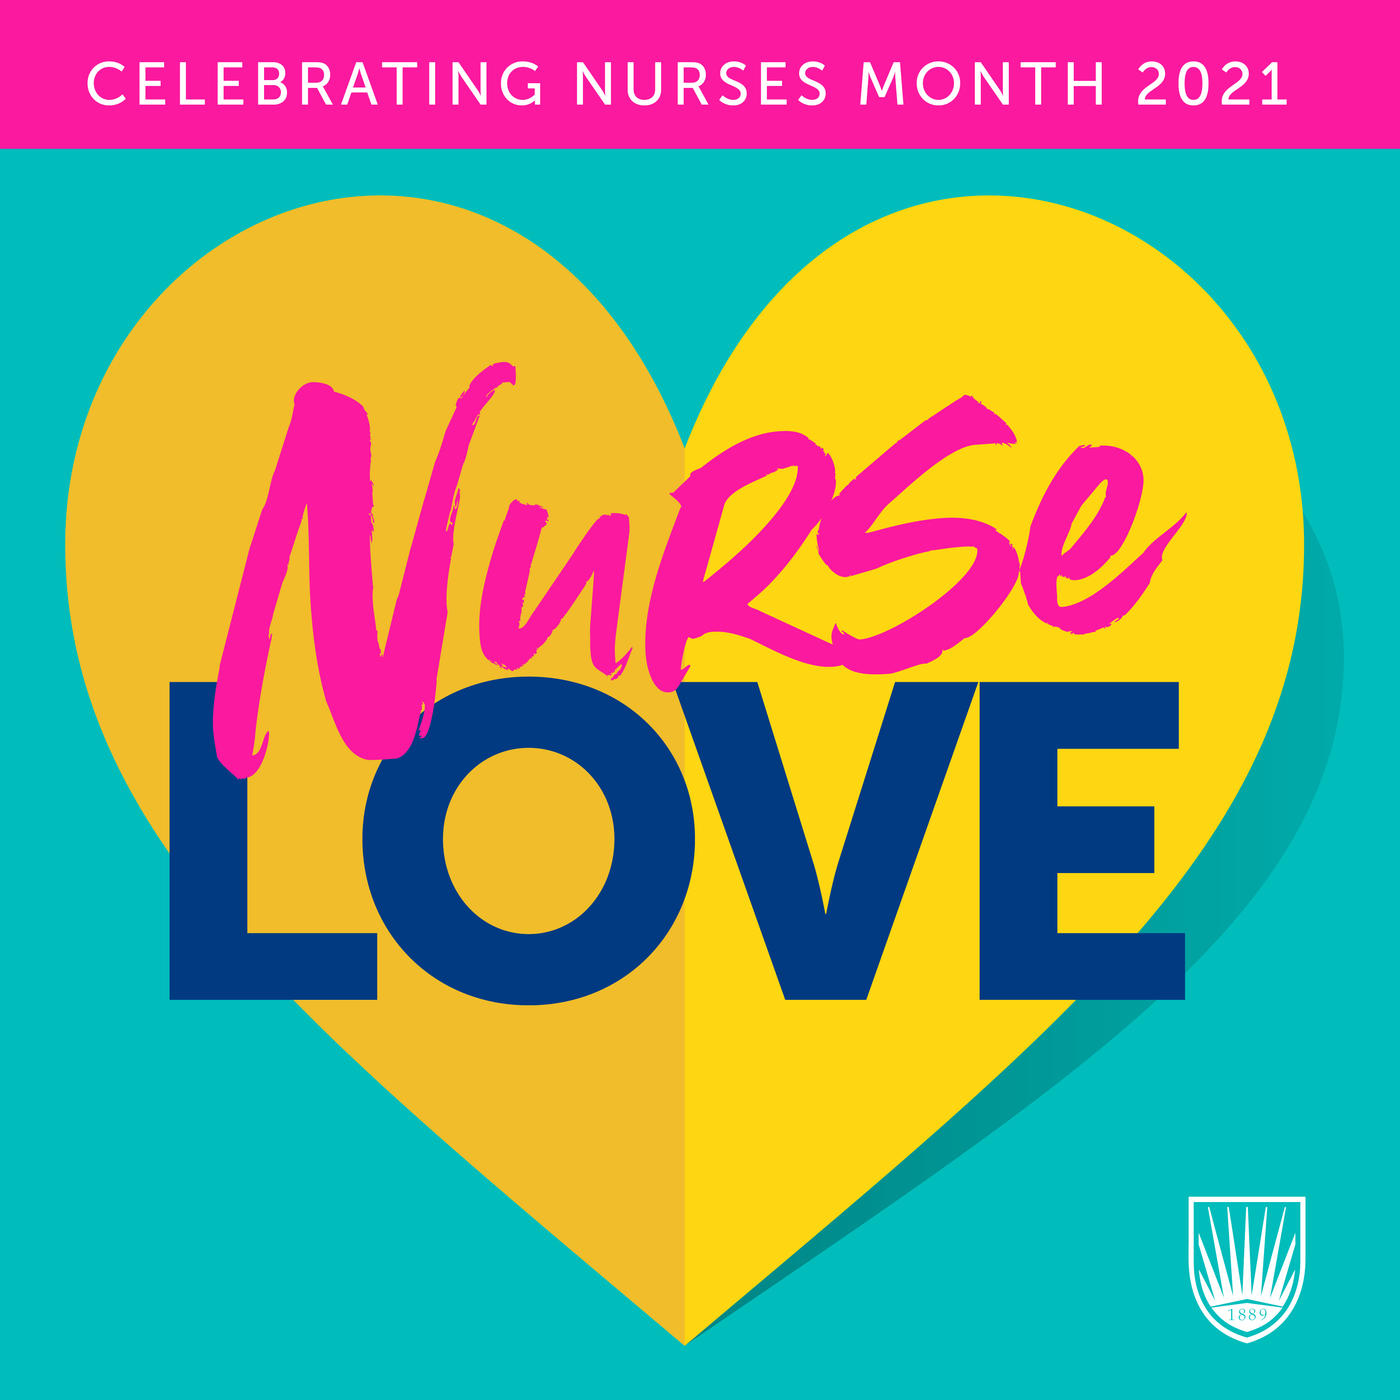 "Celebrating nurses month 2021 - Nurse Love" Yellow heart